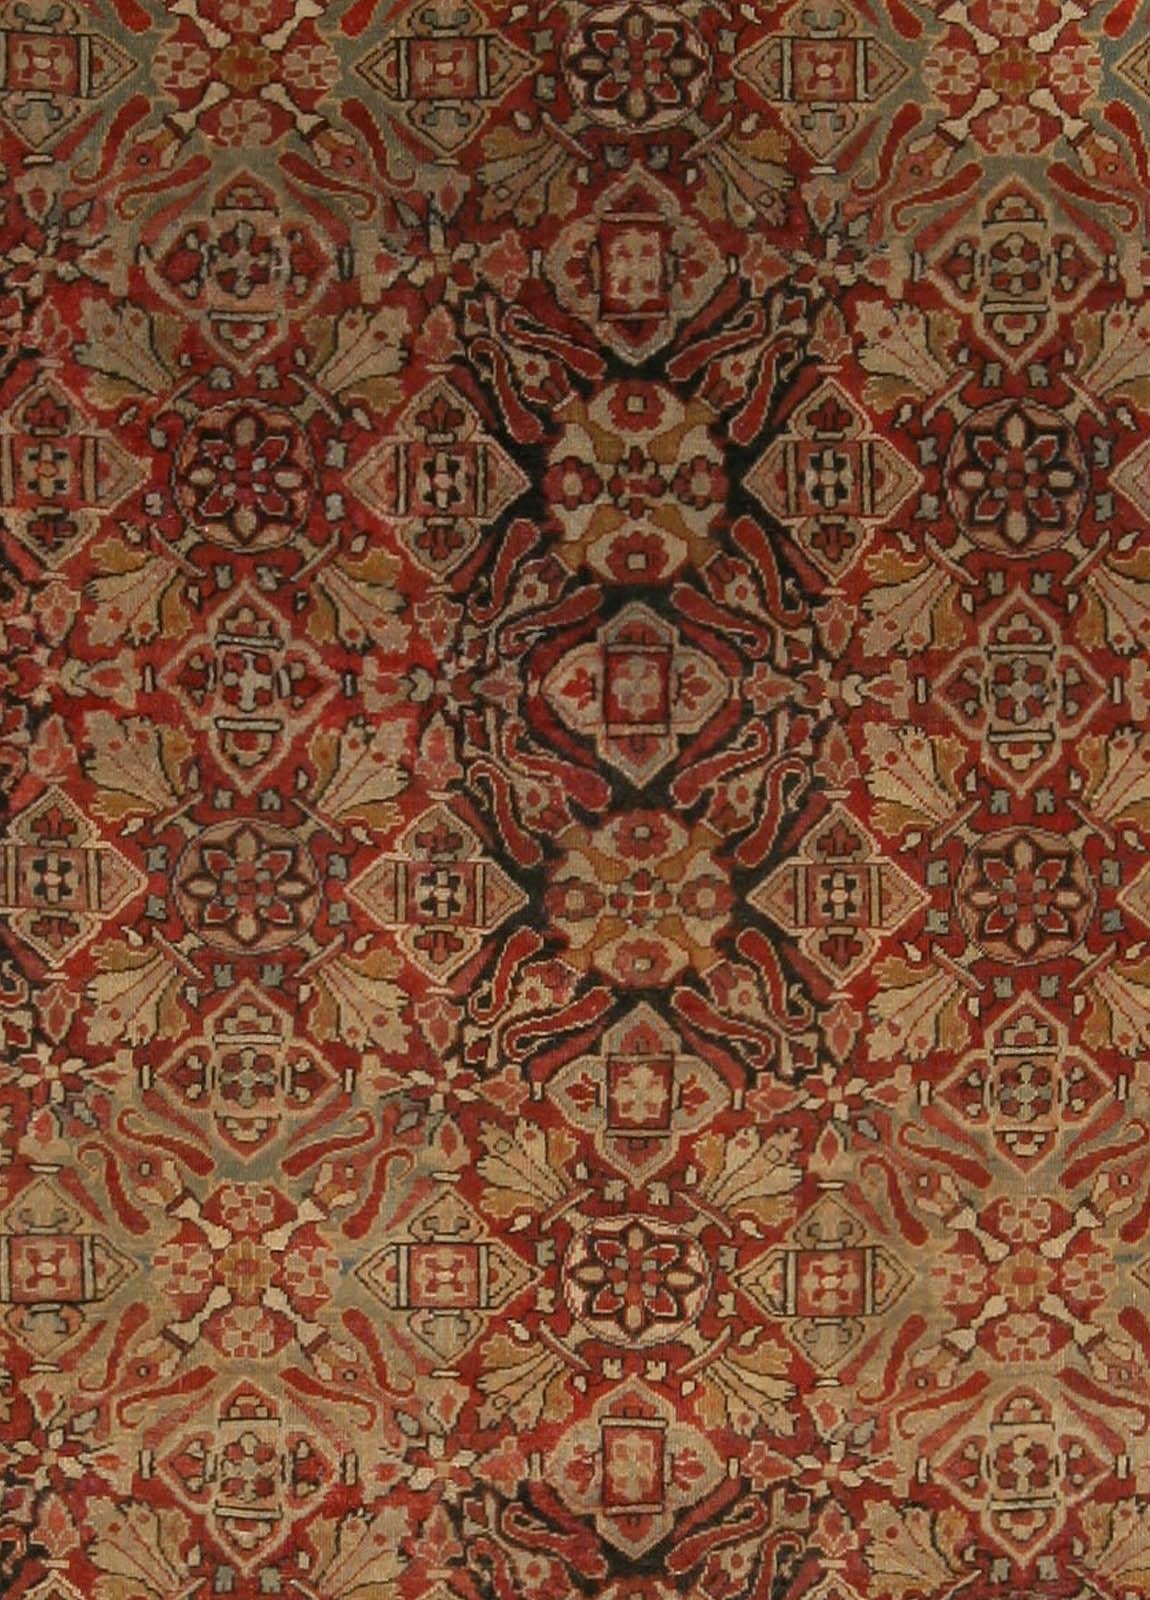 19th Century authentic Indian Amritsar botanic handmade wool carpet
Size: 13'2